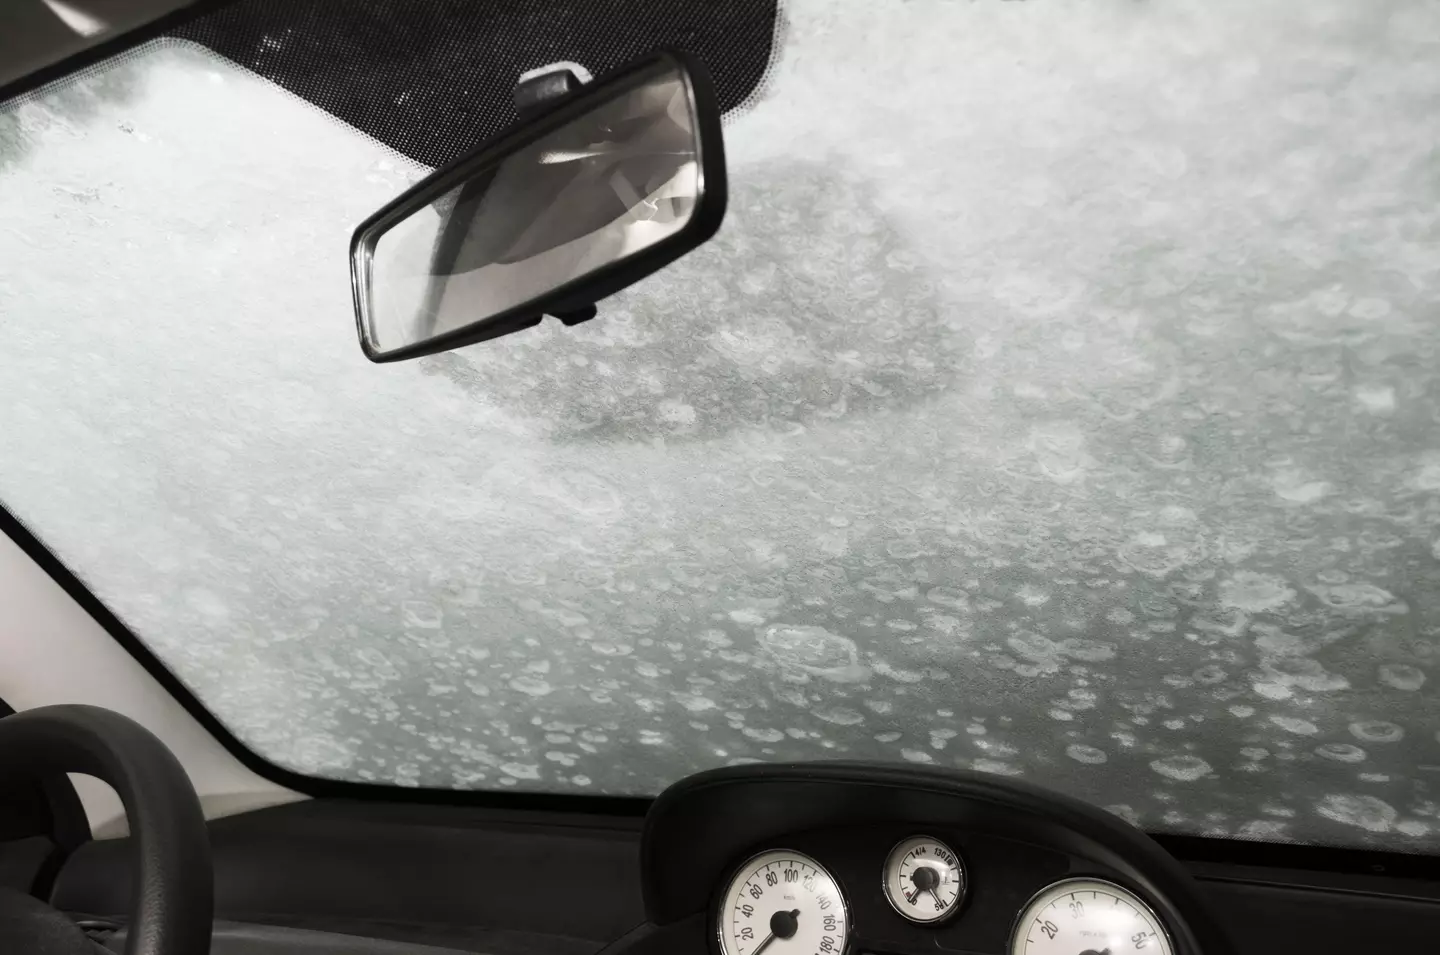 Frozen windscreens can be incredibly dangerous.